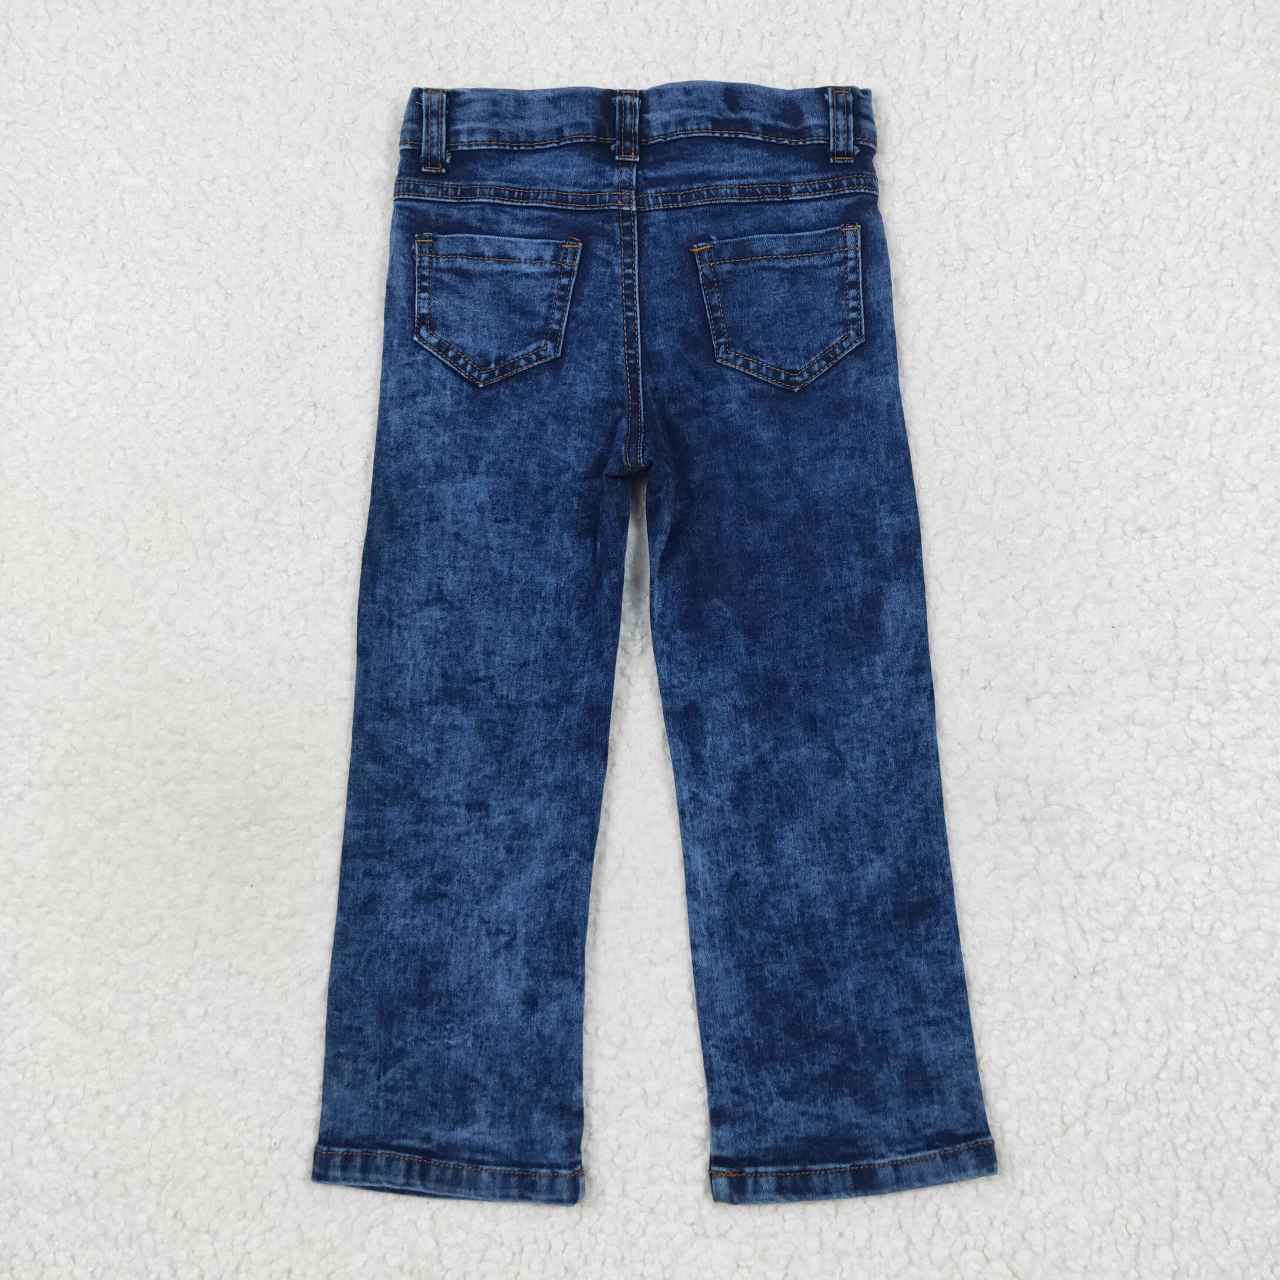 P0197   Kids blue denim hole legging jeans